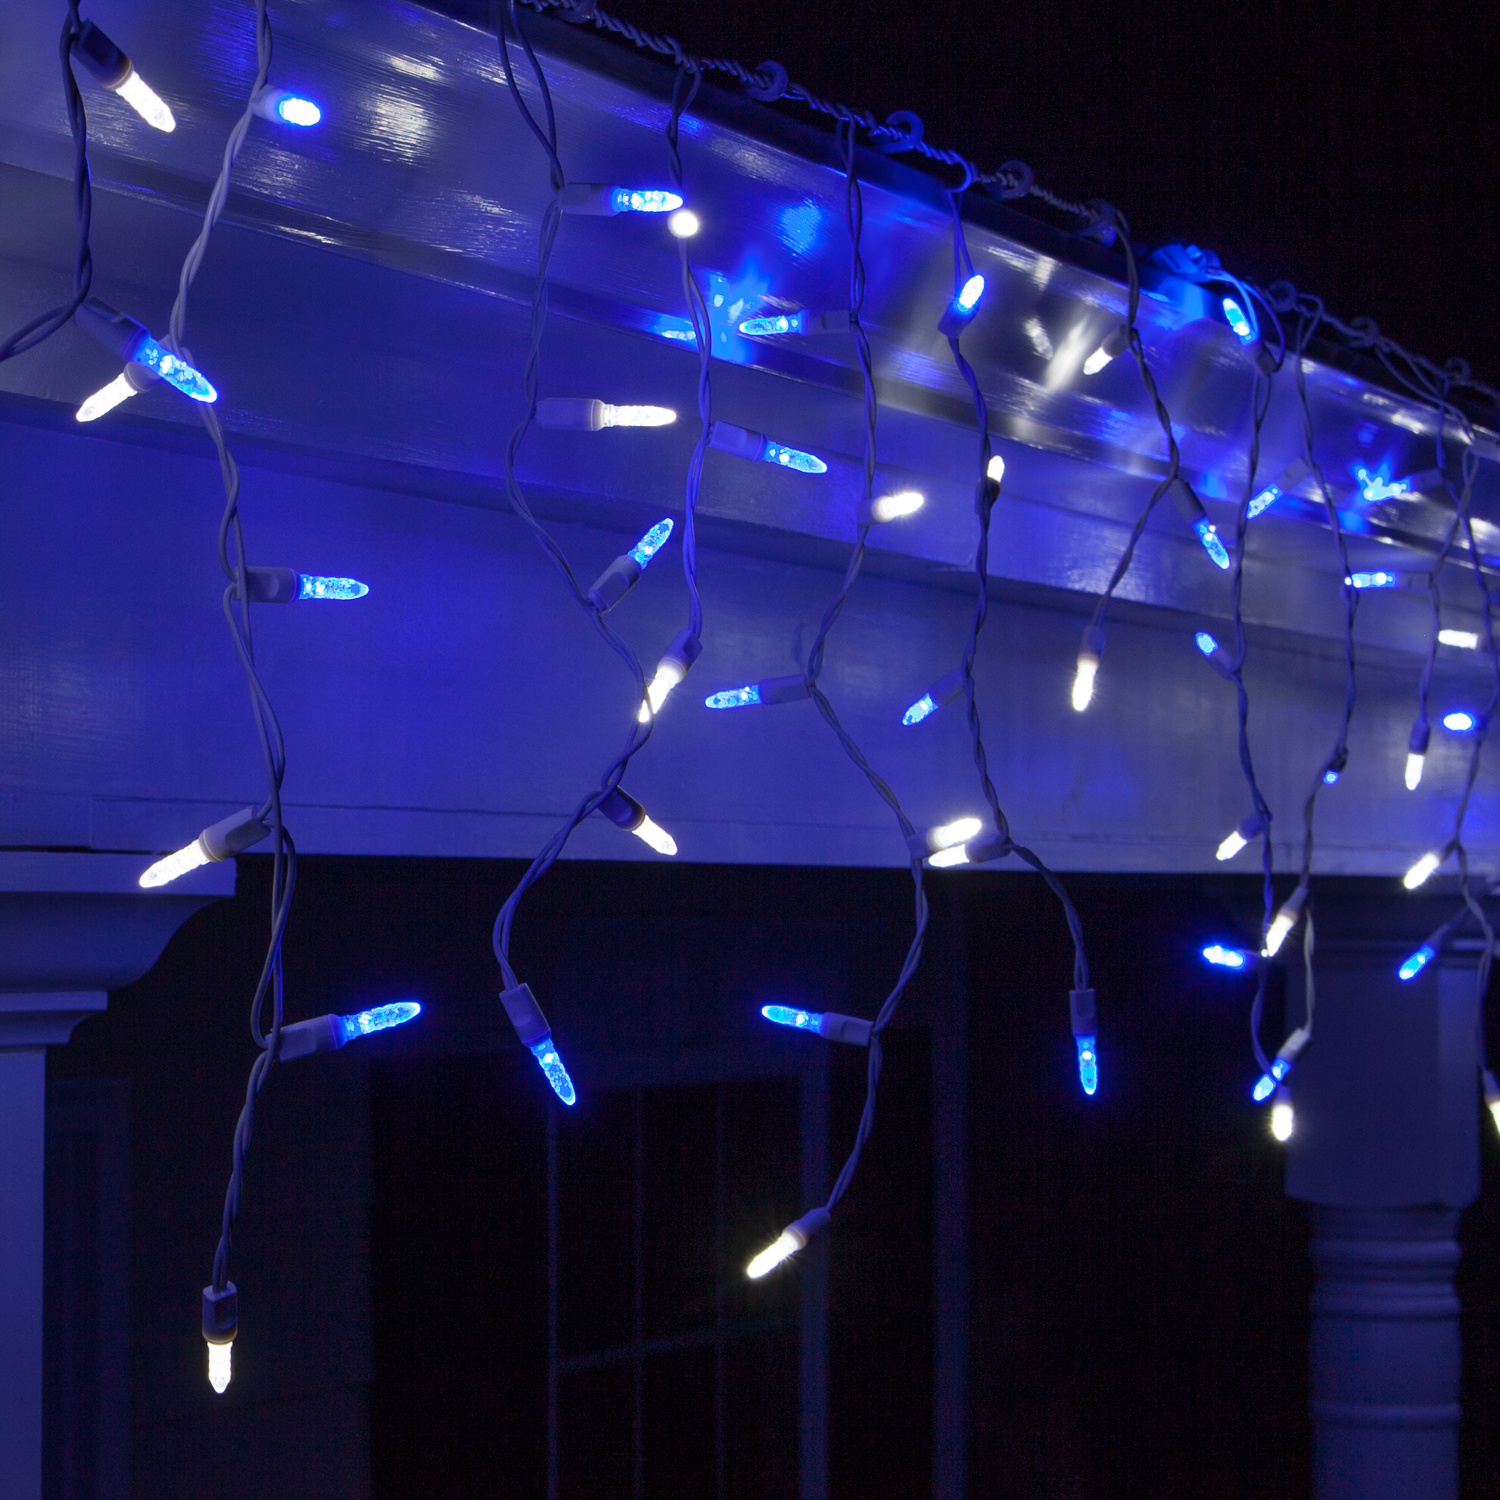 LED Christmas Lights - 70 M5 Blue and White LED Icicle Lights